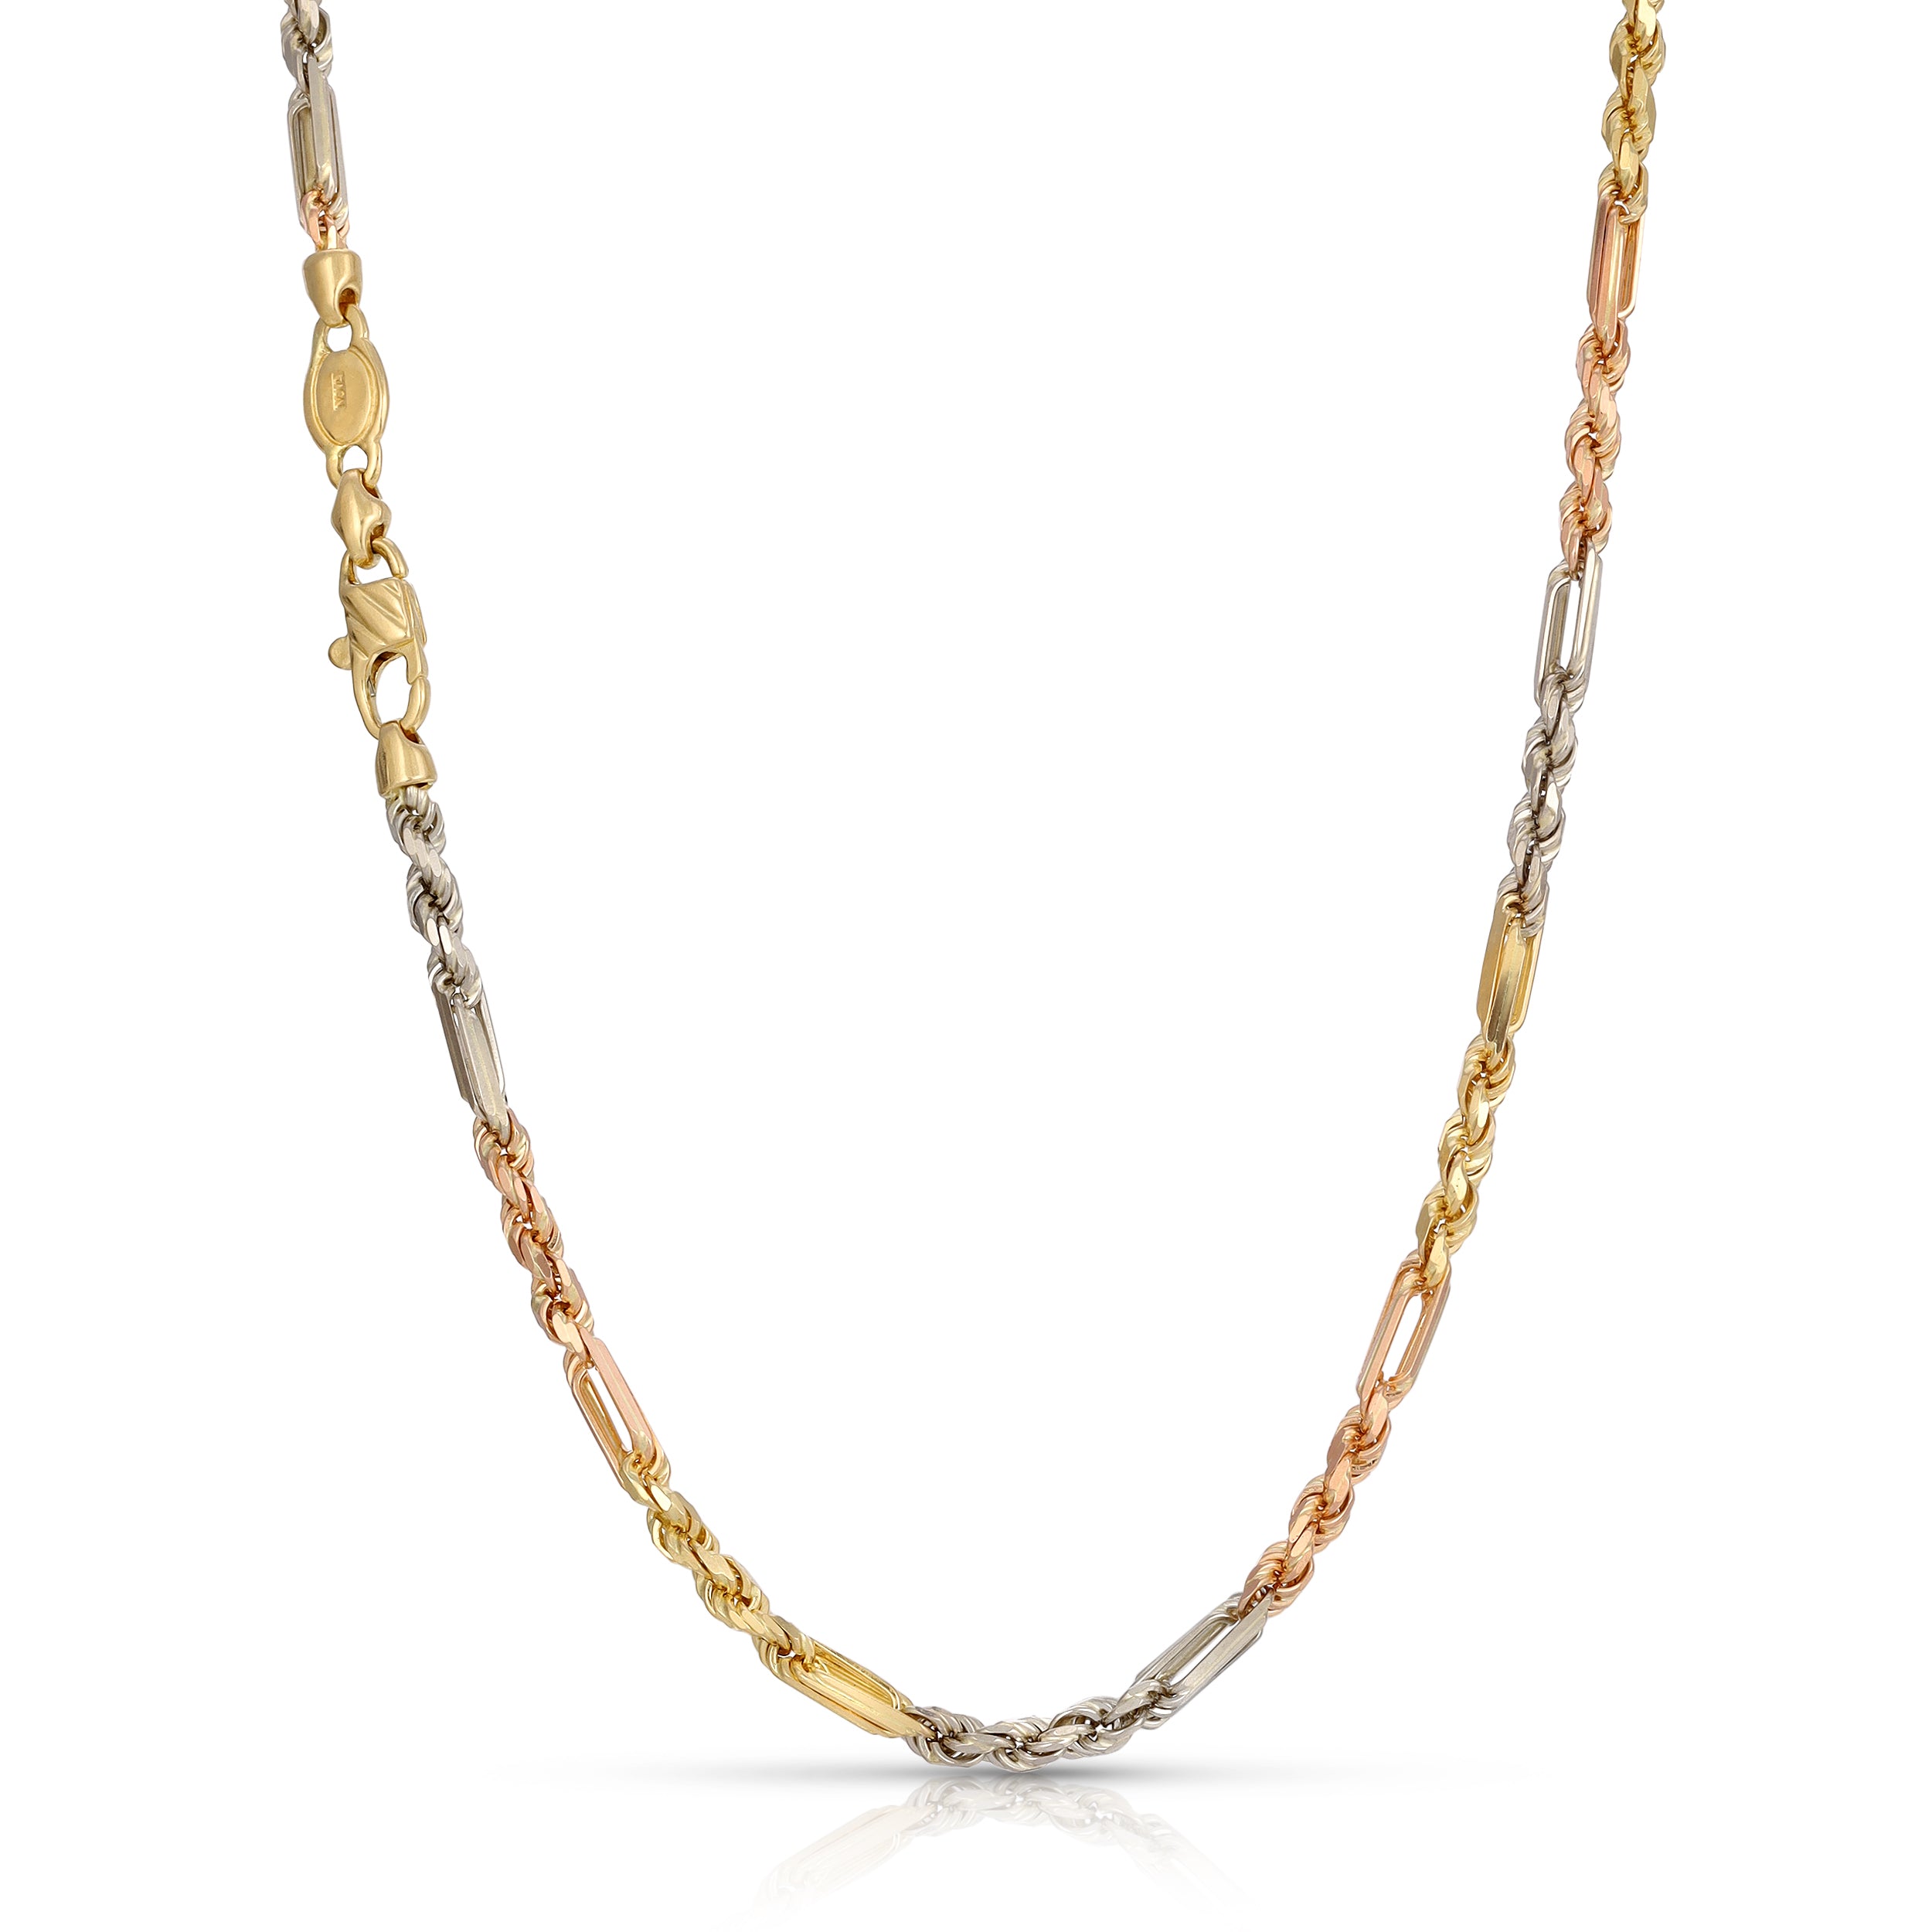 3 Tier Gold-Tone Necklace | eBay